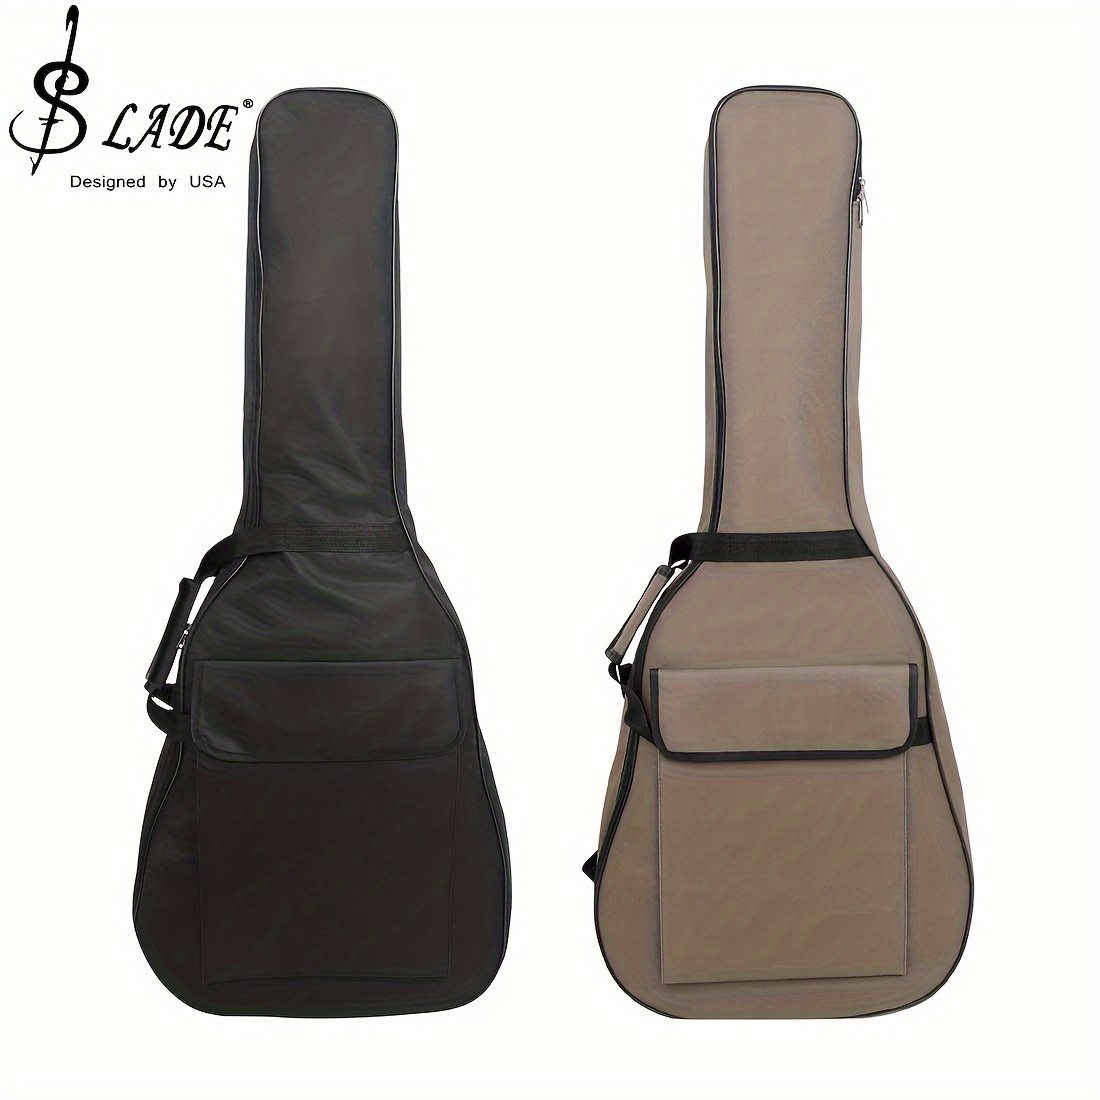 Shiver - Housse guitare folk/classique 4/4 standard - Tote bag - Supports  Customisation - Customisation